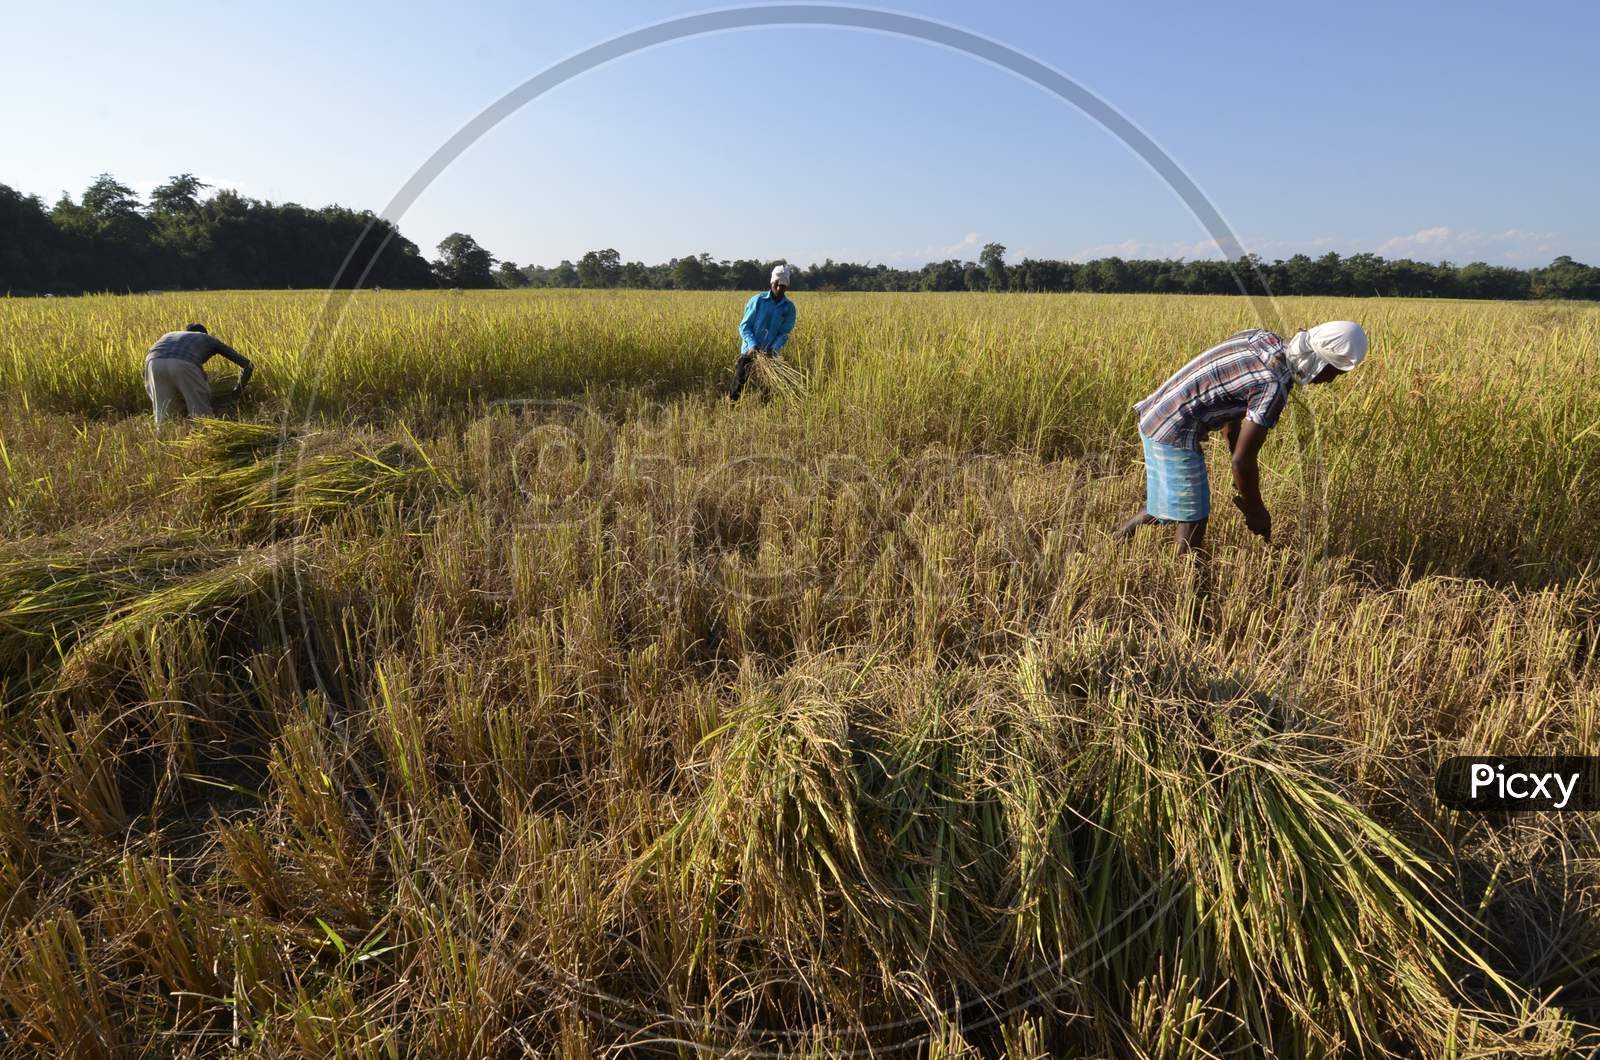 Indian Farmers Working In Paddy Harvesting Fields in Barpeta, Assam